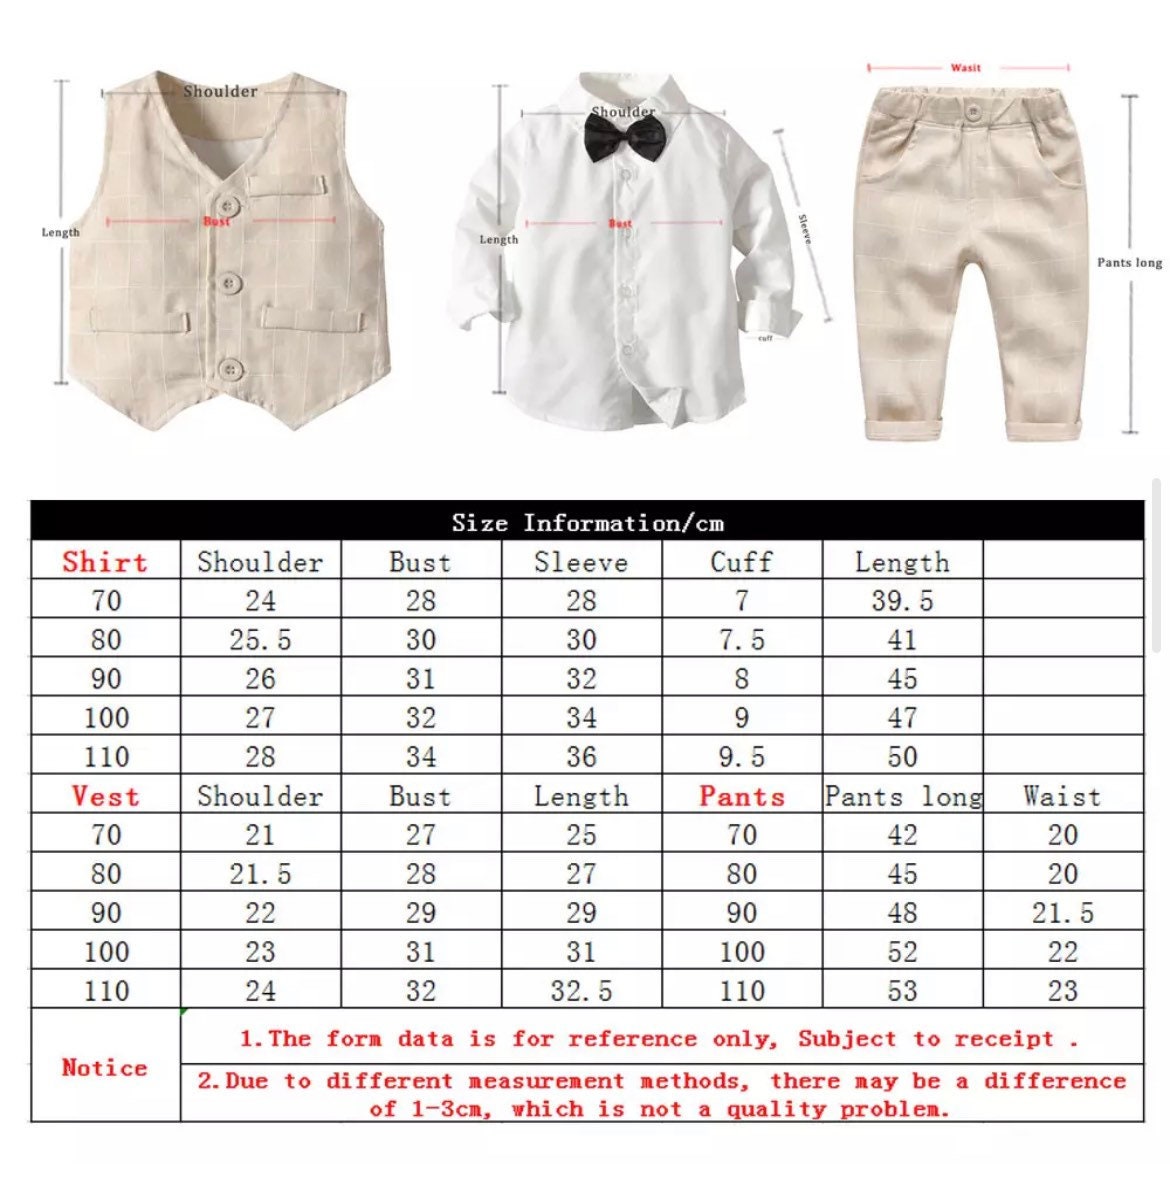 Mayfair - Baby / Toddler Boys Long Sleeve Suit Set.